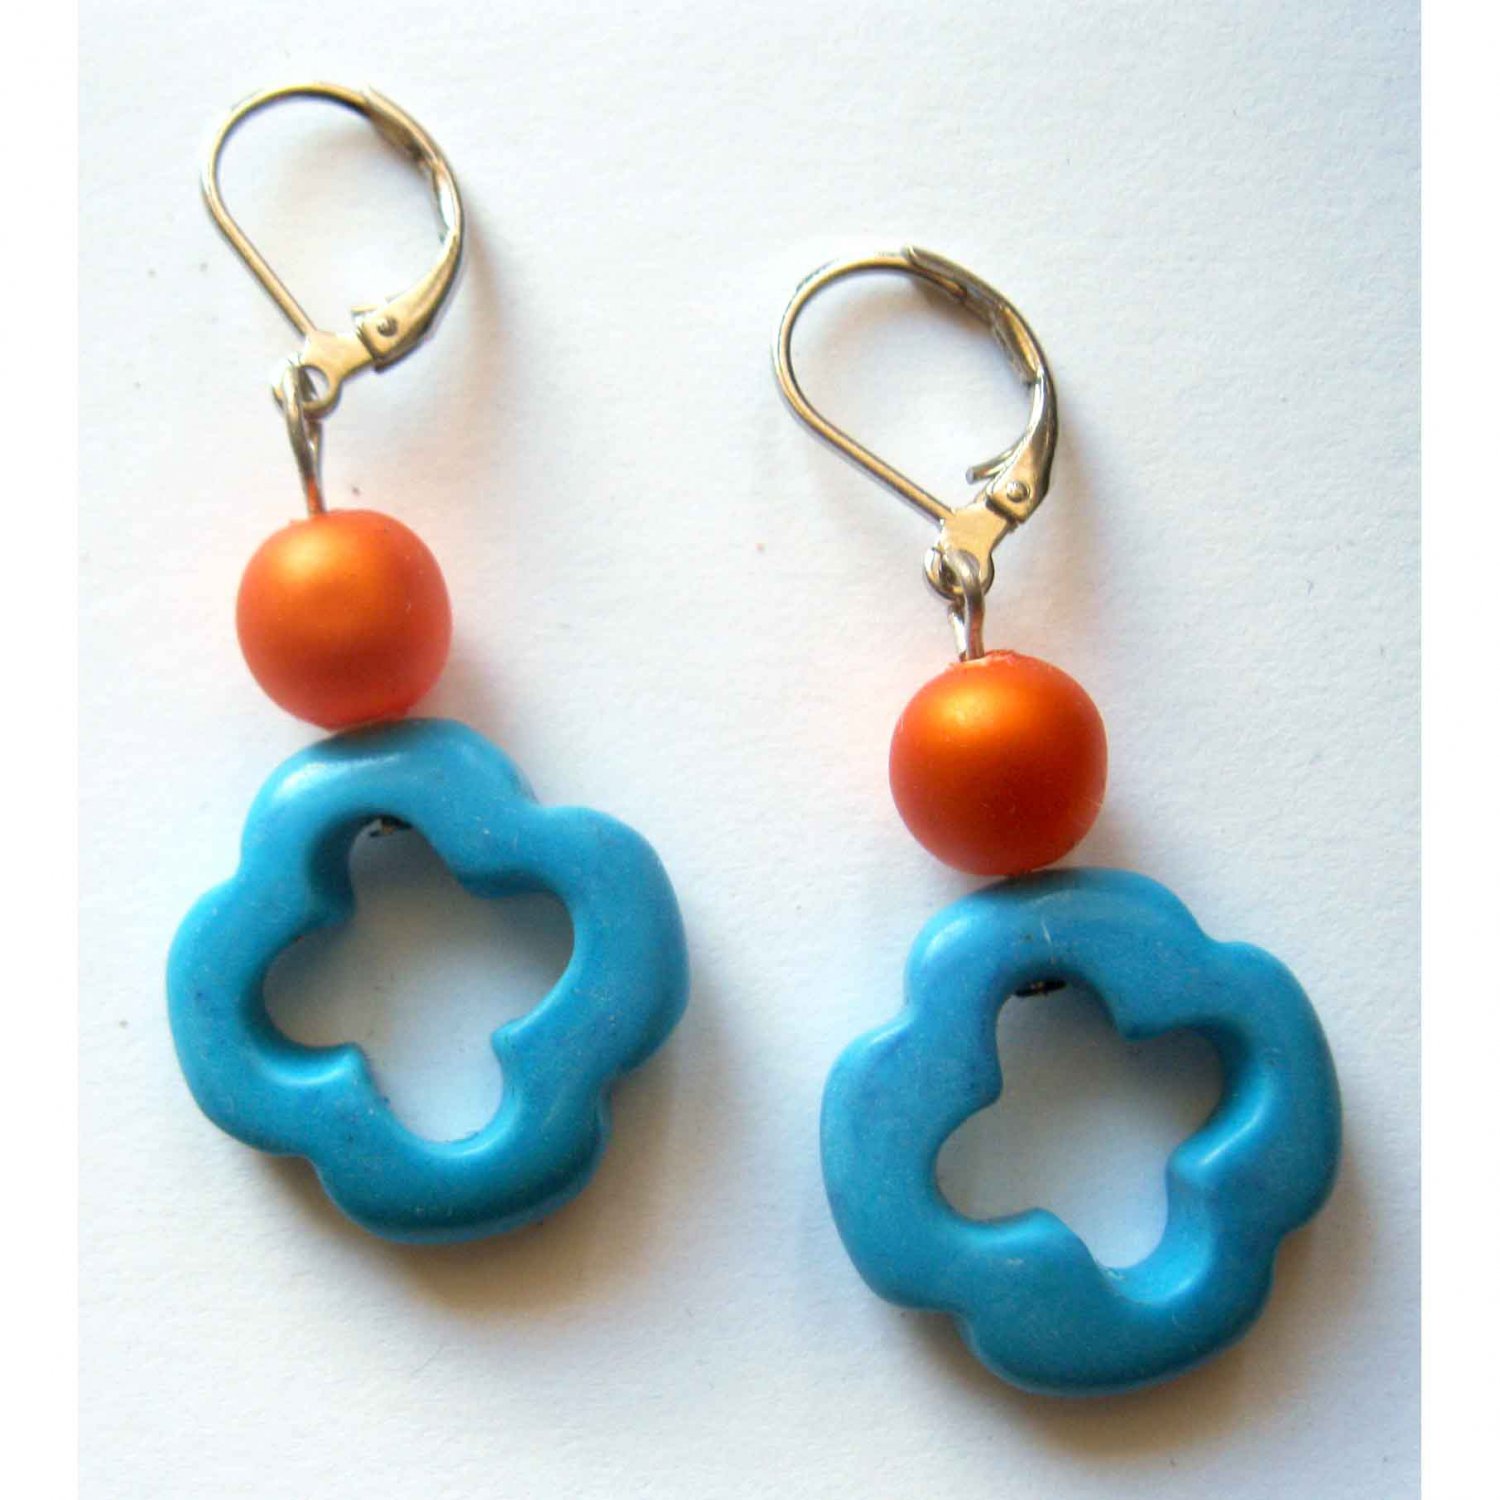 Blue cross semiprecious drop earrings with orange